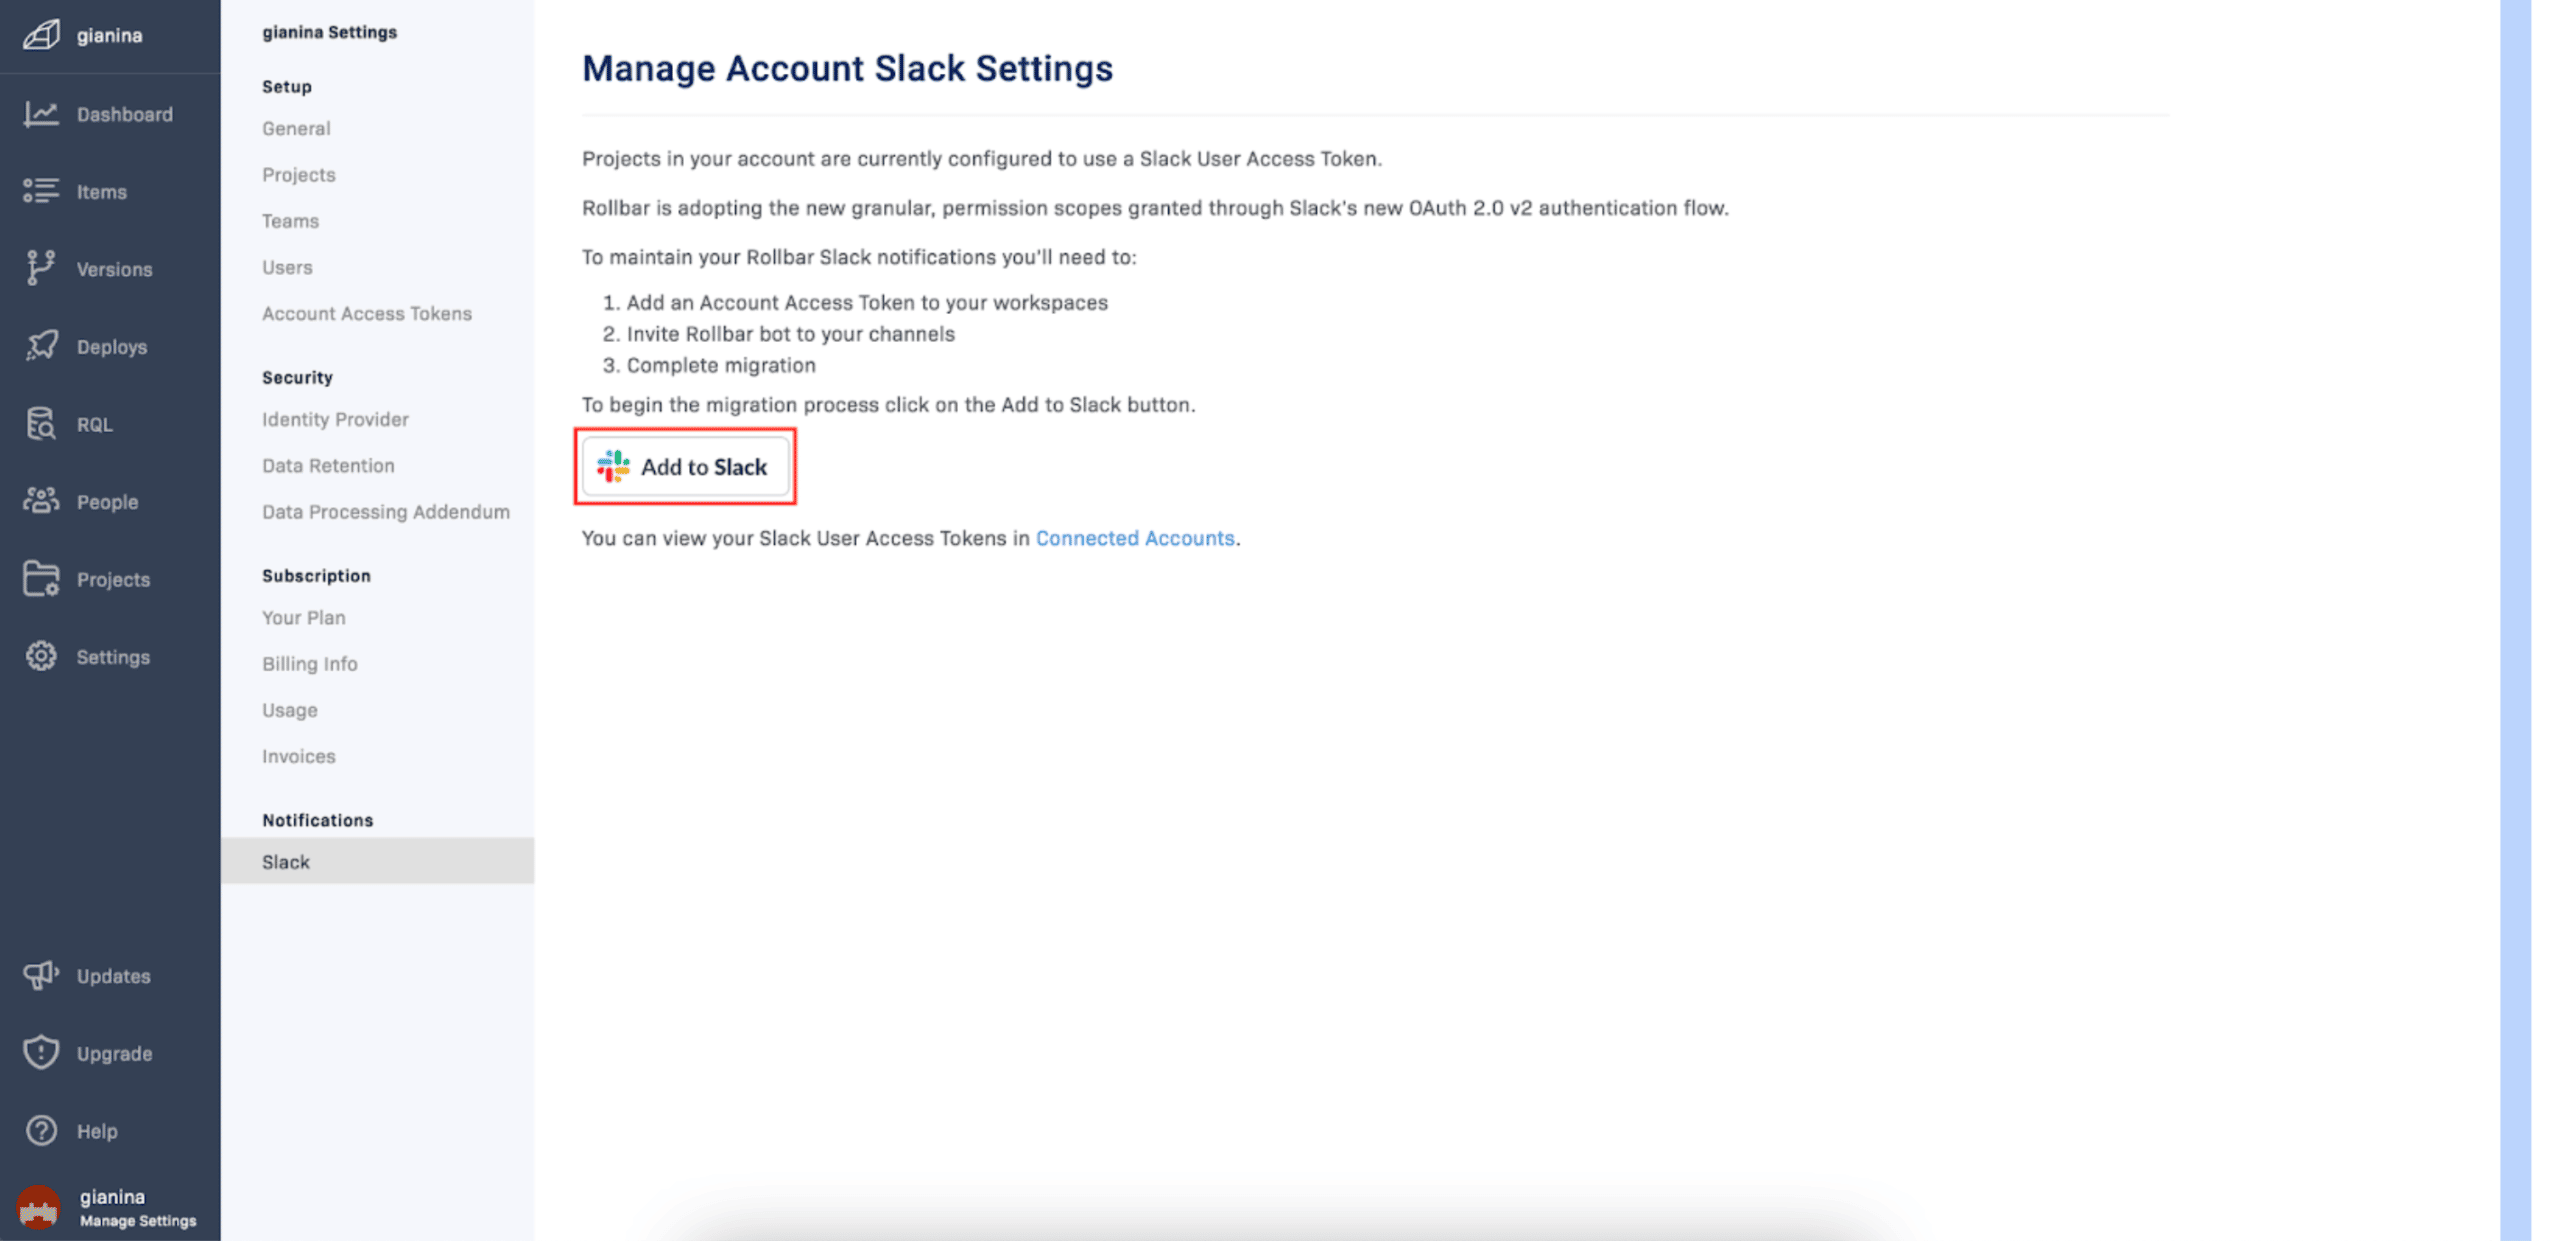 Manage Account Slack Settings